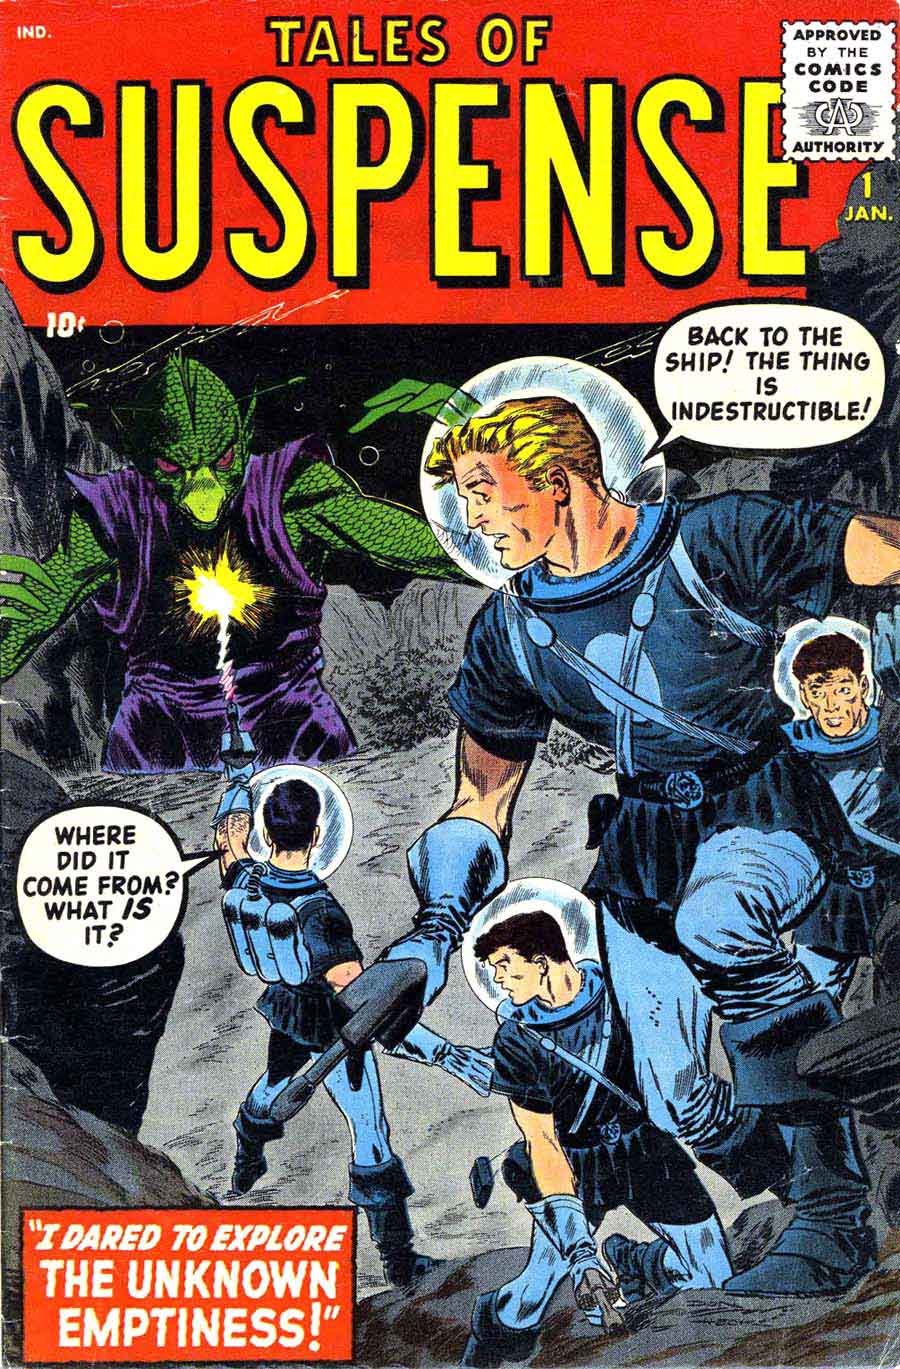 Tales of Suspense #1 golden age atlas 1950s science fiction comic book cover art